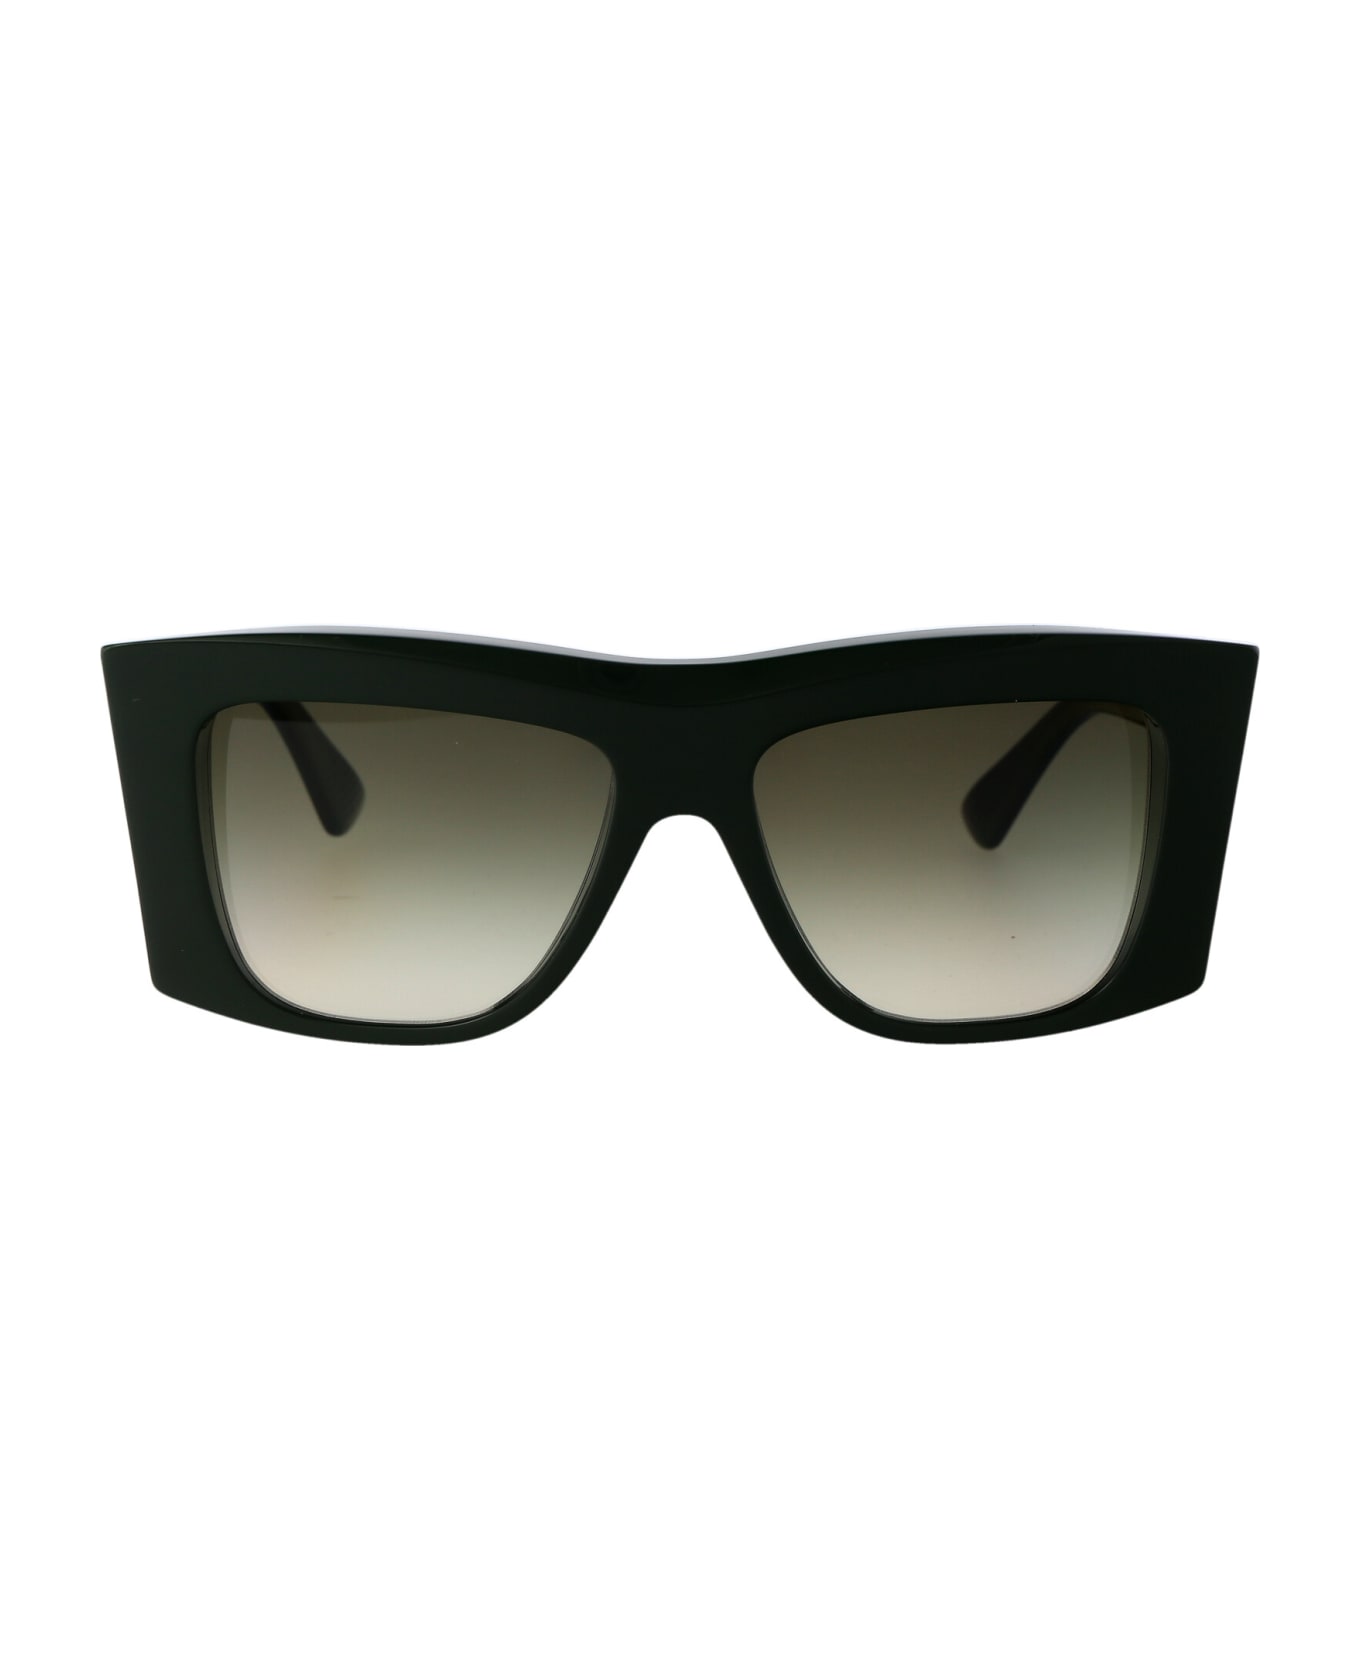 Bottega Veneta Eyewear Bv1270s Sunglasses - 004 GREEN GREEN GREEN サングラス